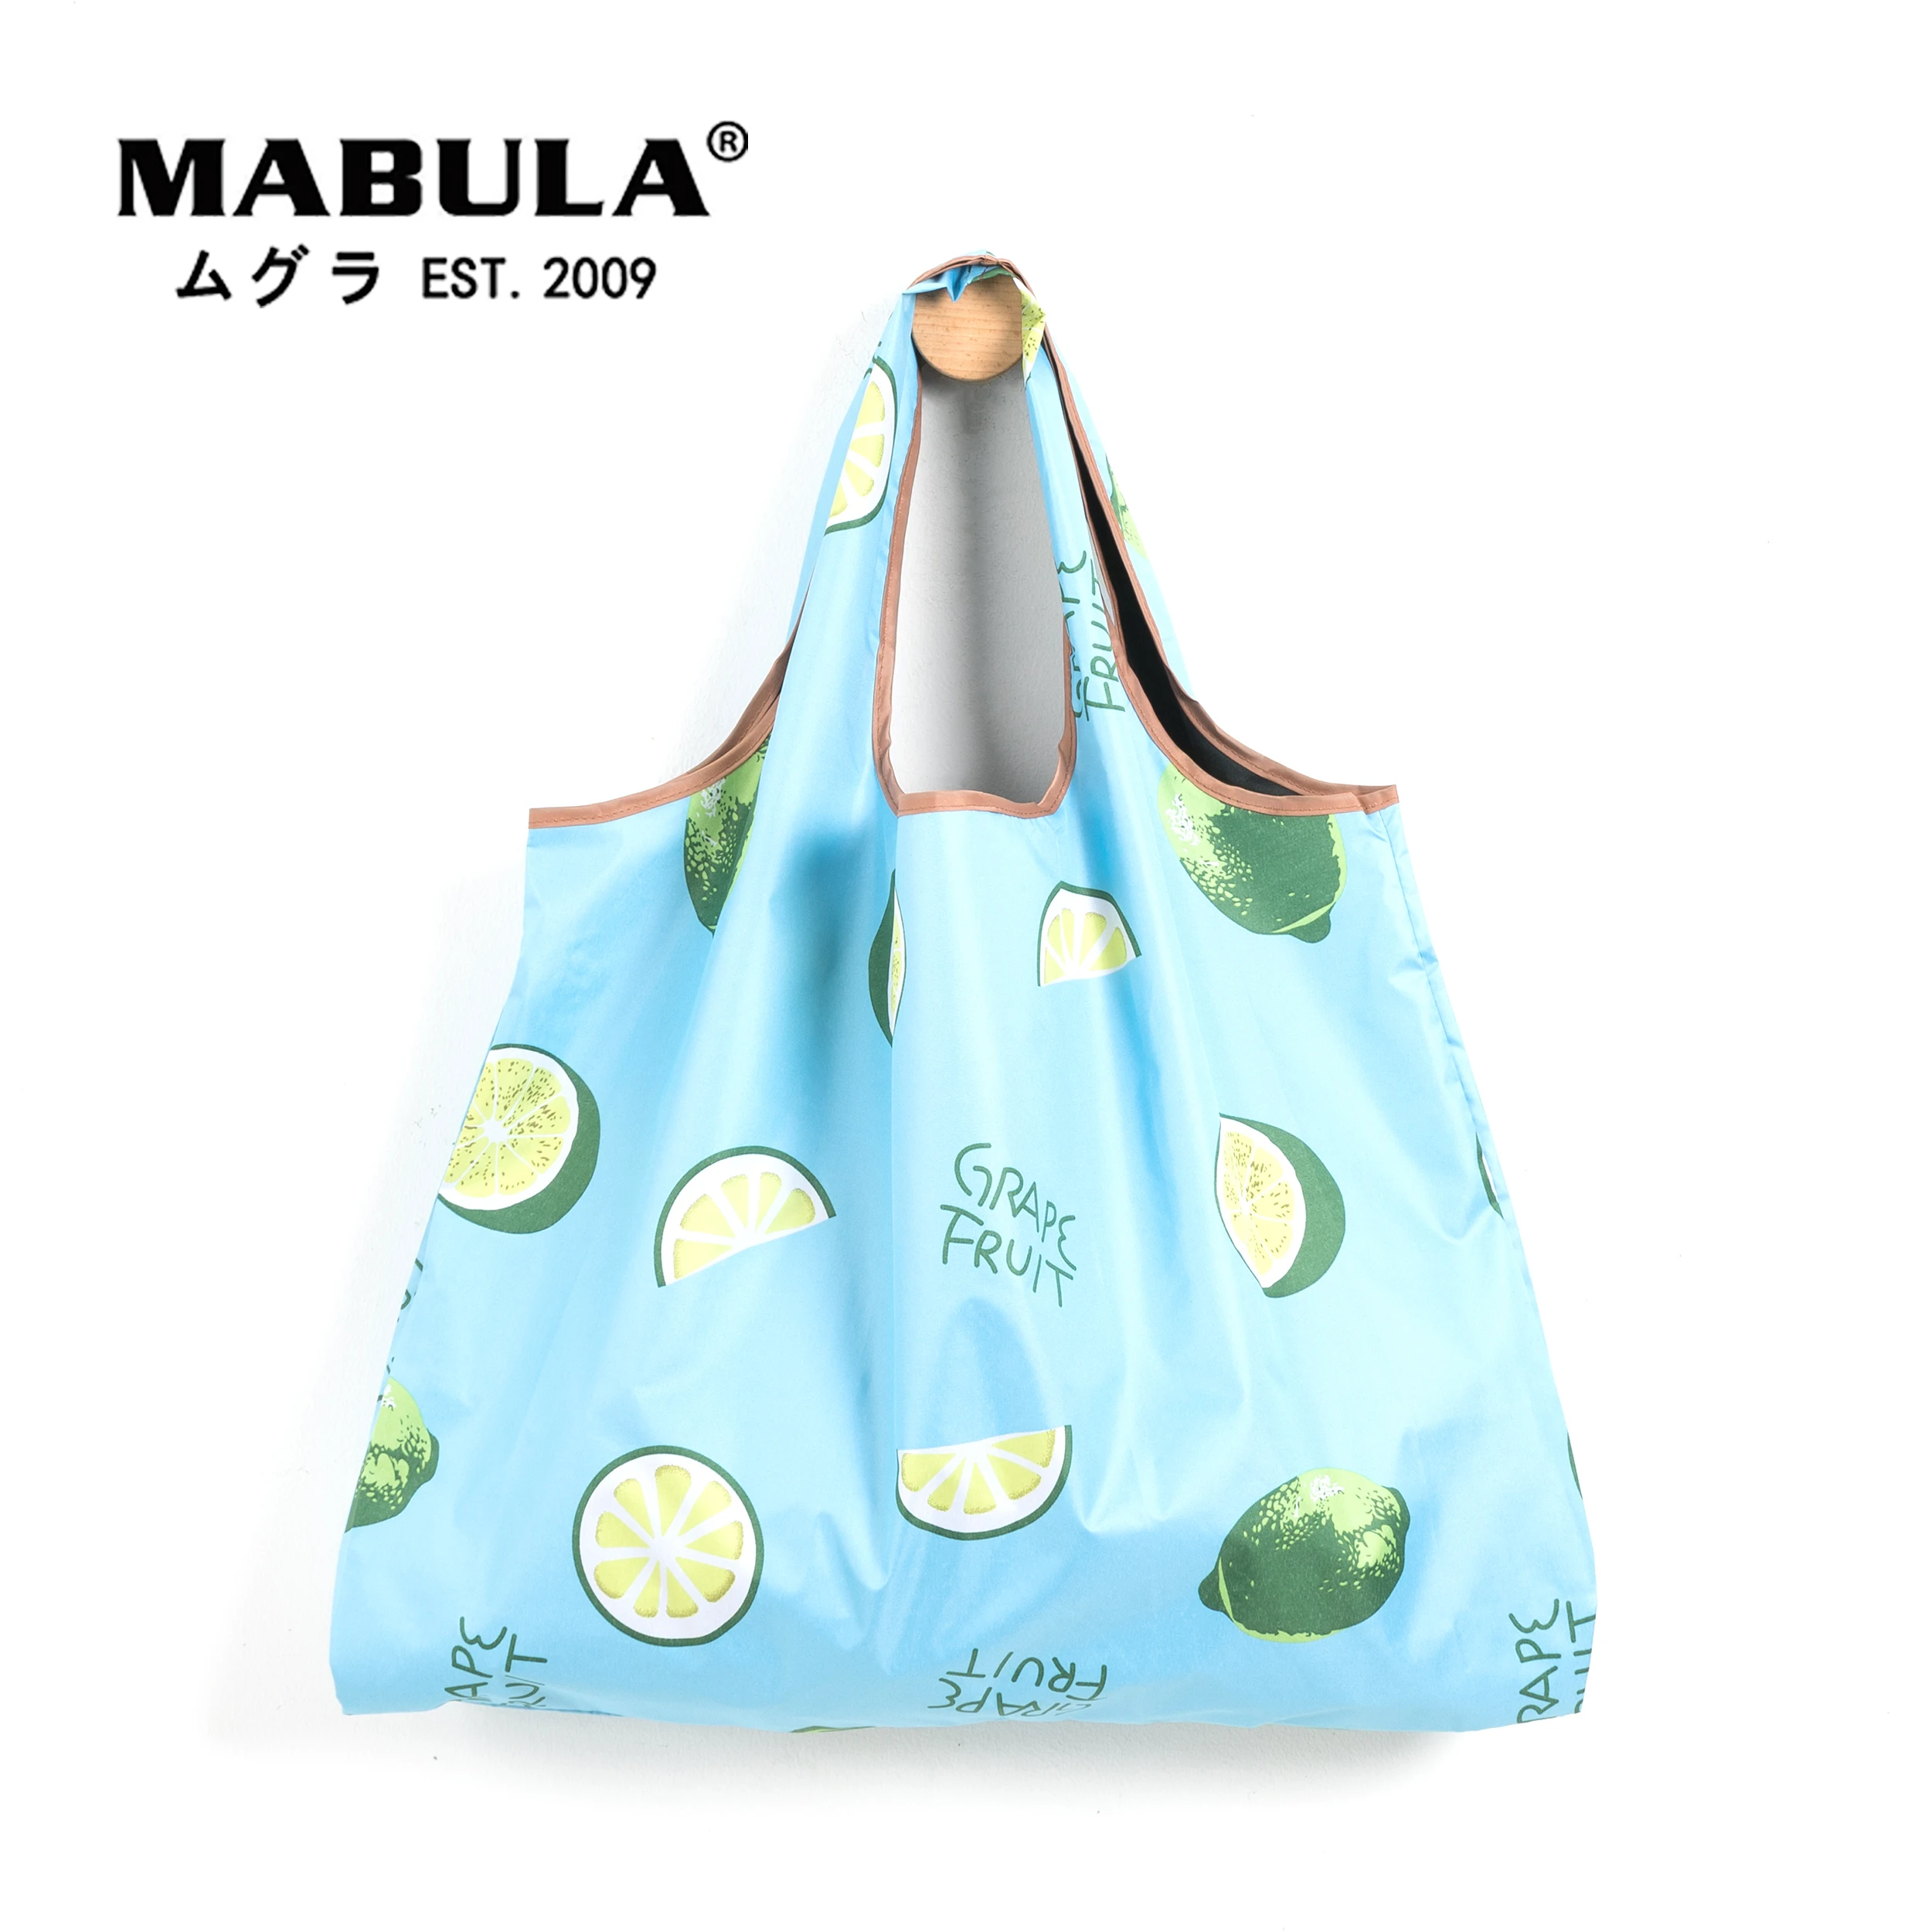 Cartoon Foldable Shopping Bag Eco-friendly Reusable Portable Shoulder Handbag for Travel Grocery Fashion Pocket Tote Bags